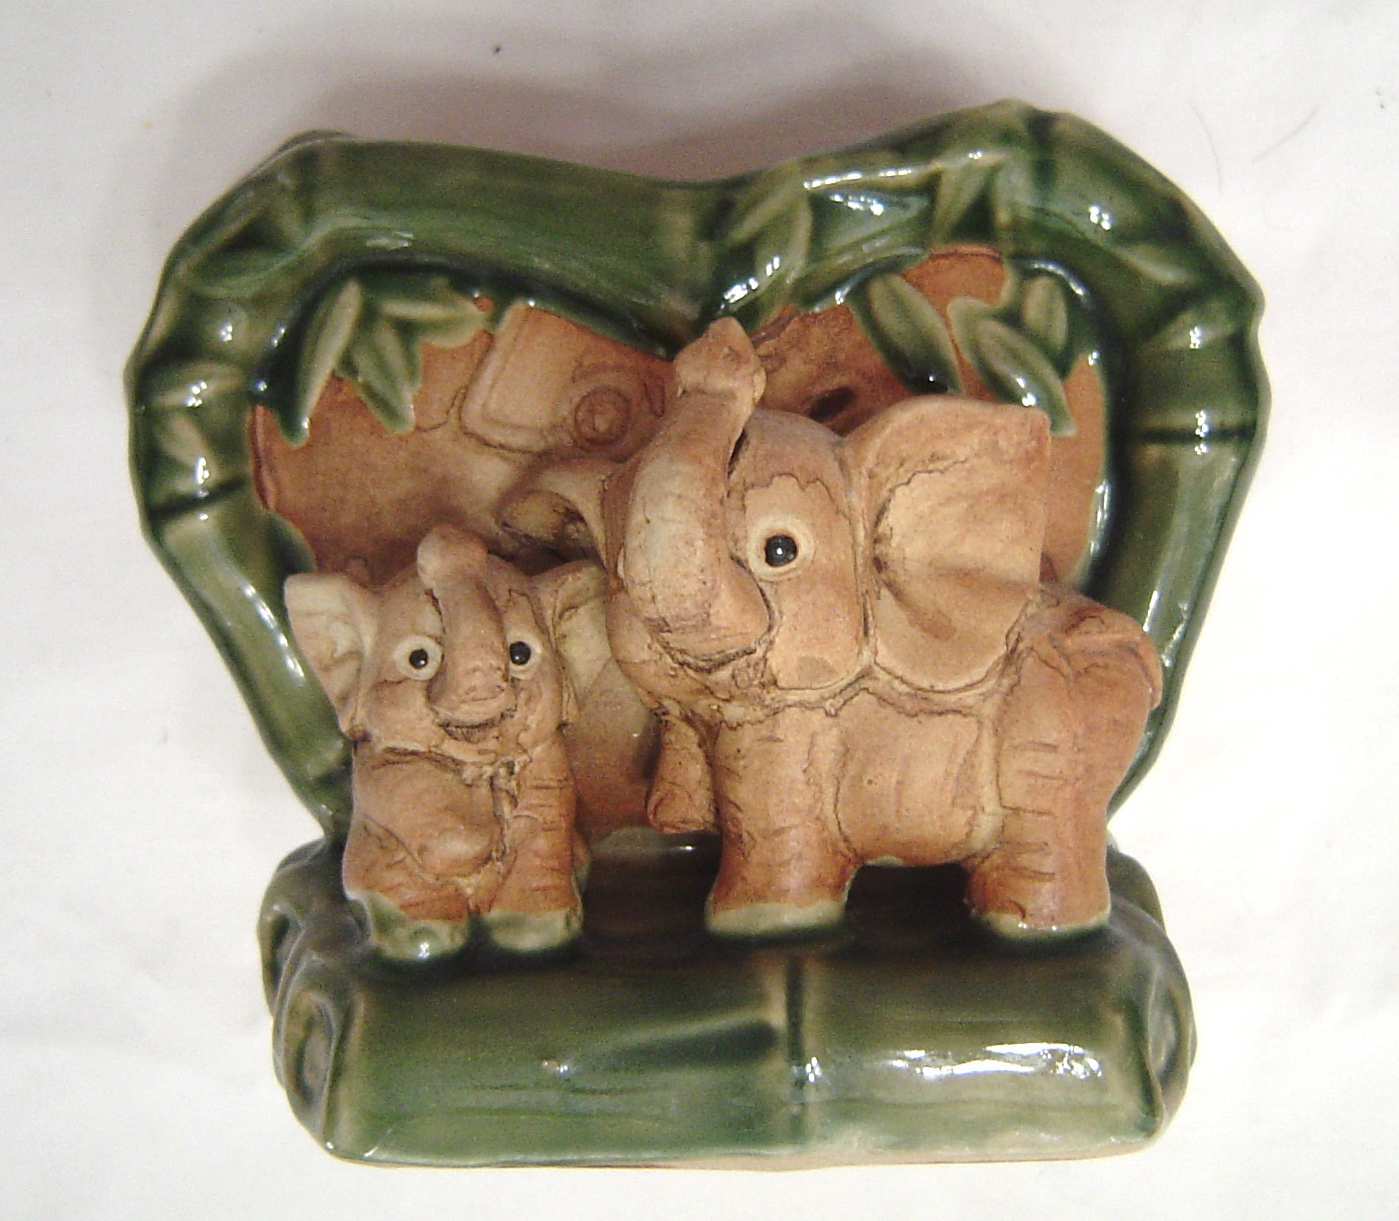  Mom and Baby Elephant Heart Shaped Love Bamboo Planter Pen Pencil Holder Pot  - $22.99